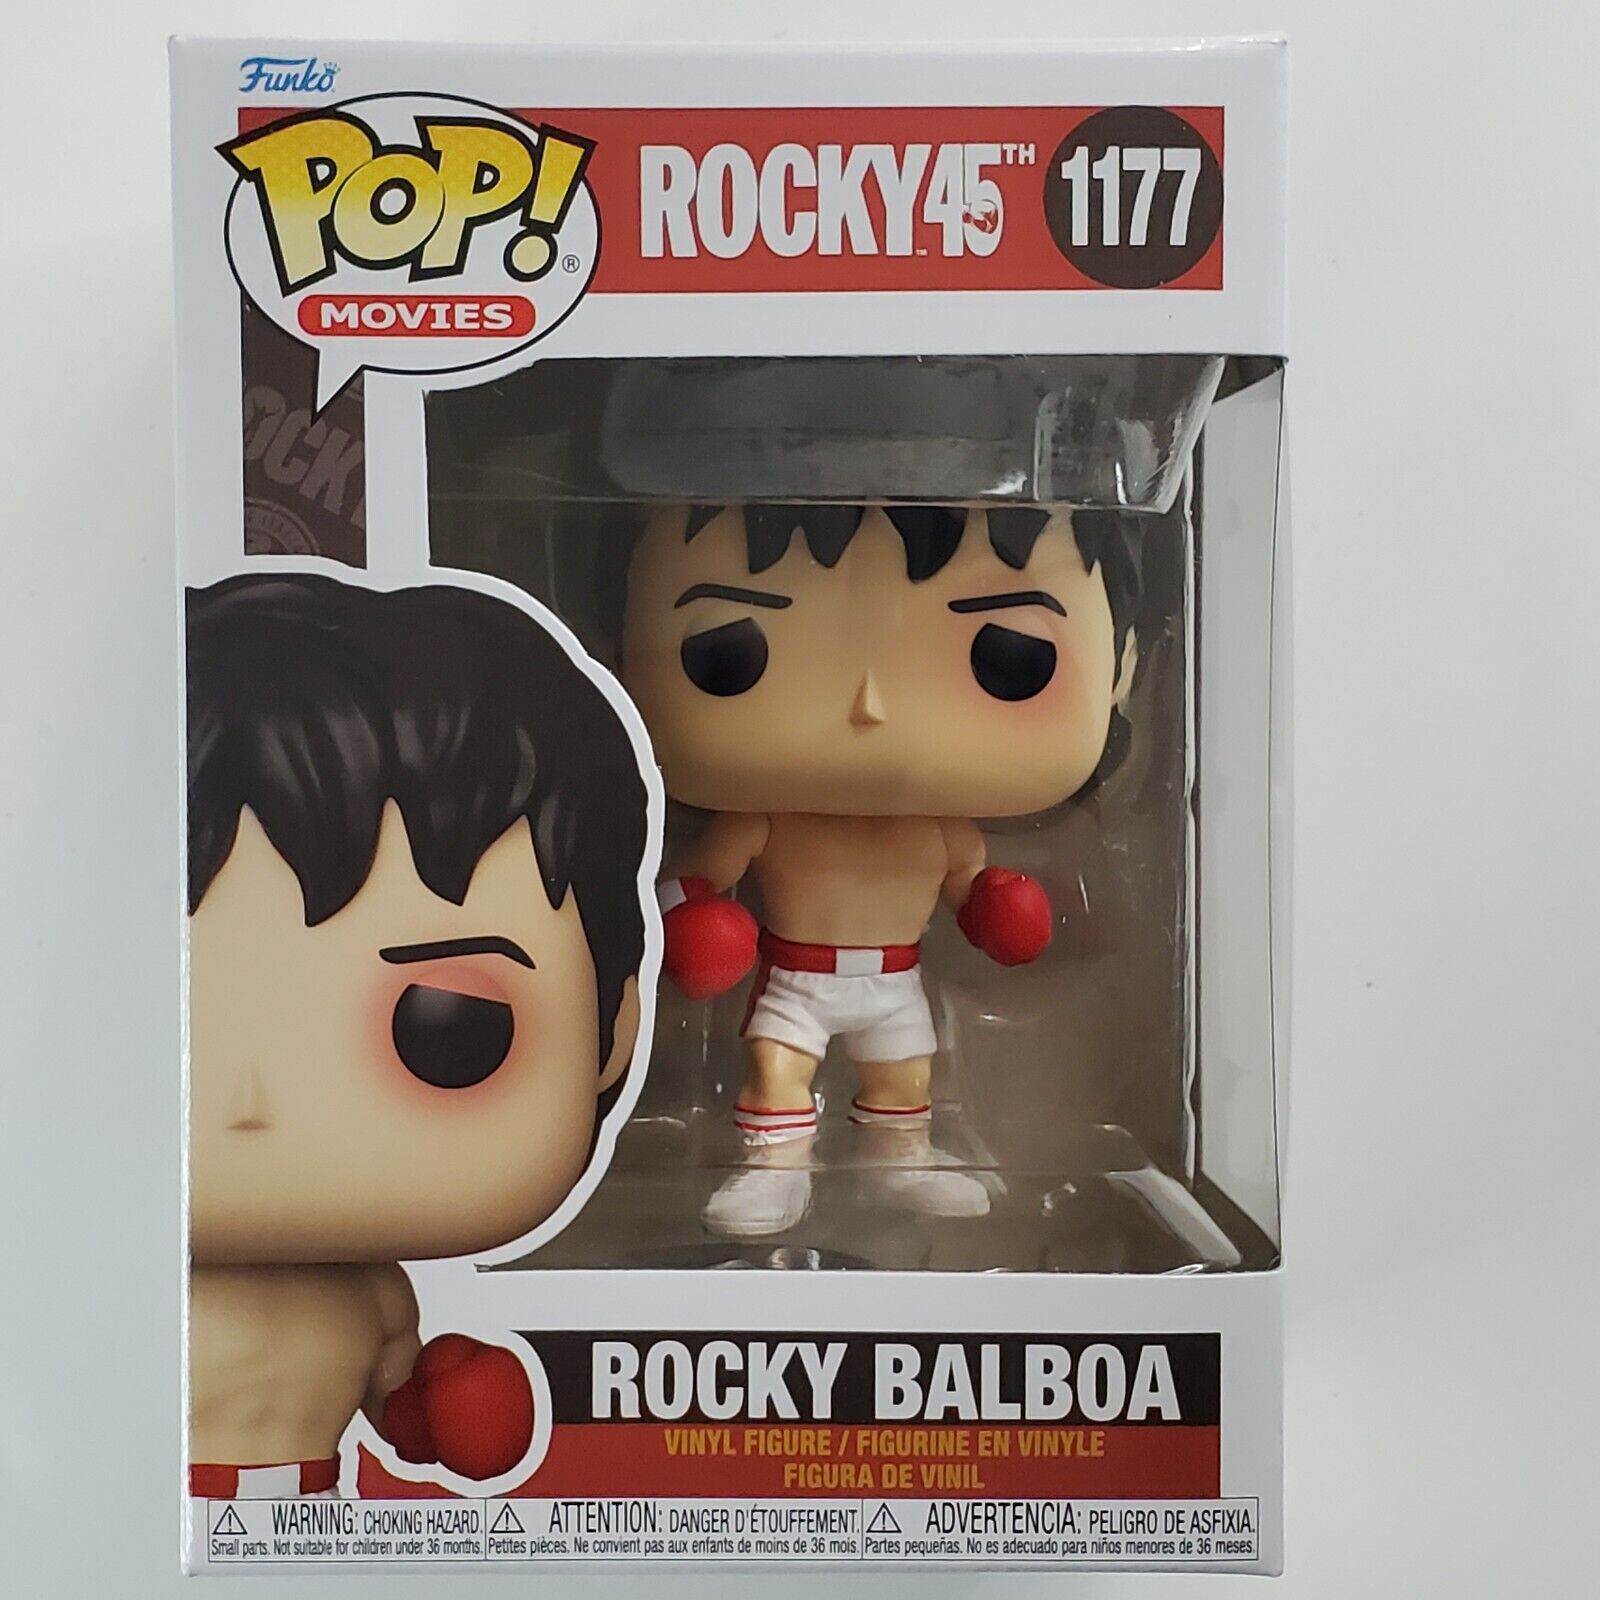 Rocky 45th Anniversary Funko POP Vinyl Figure Rocky Balboa